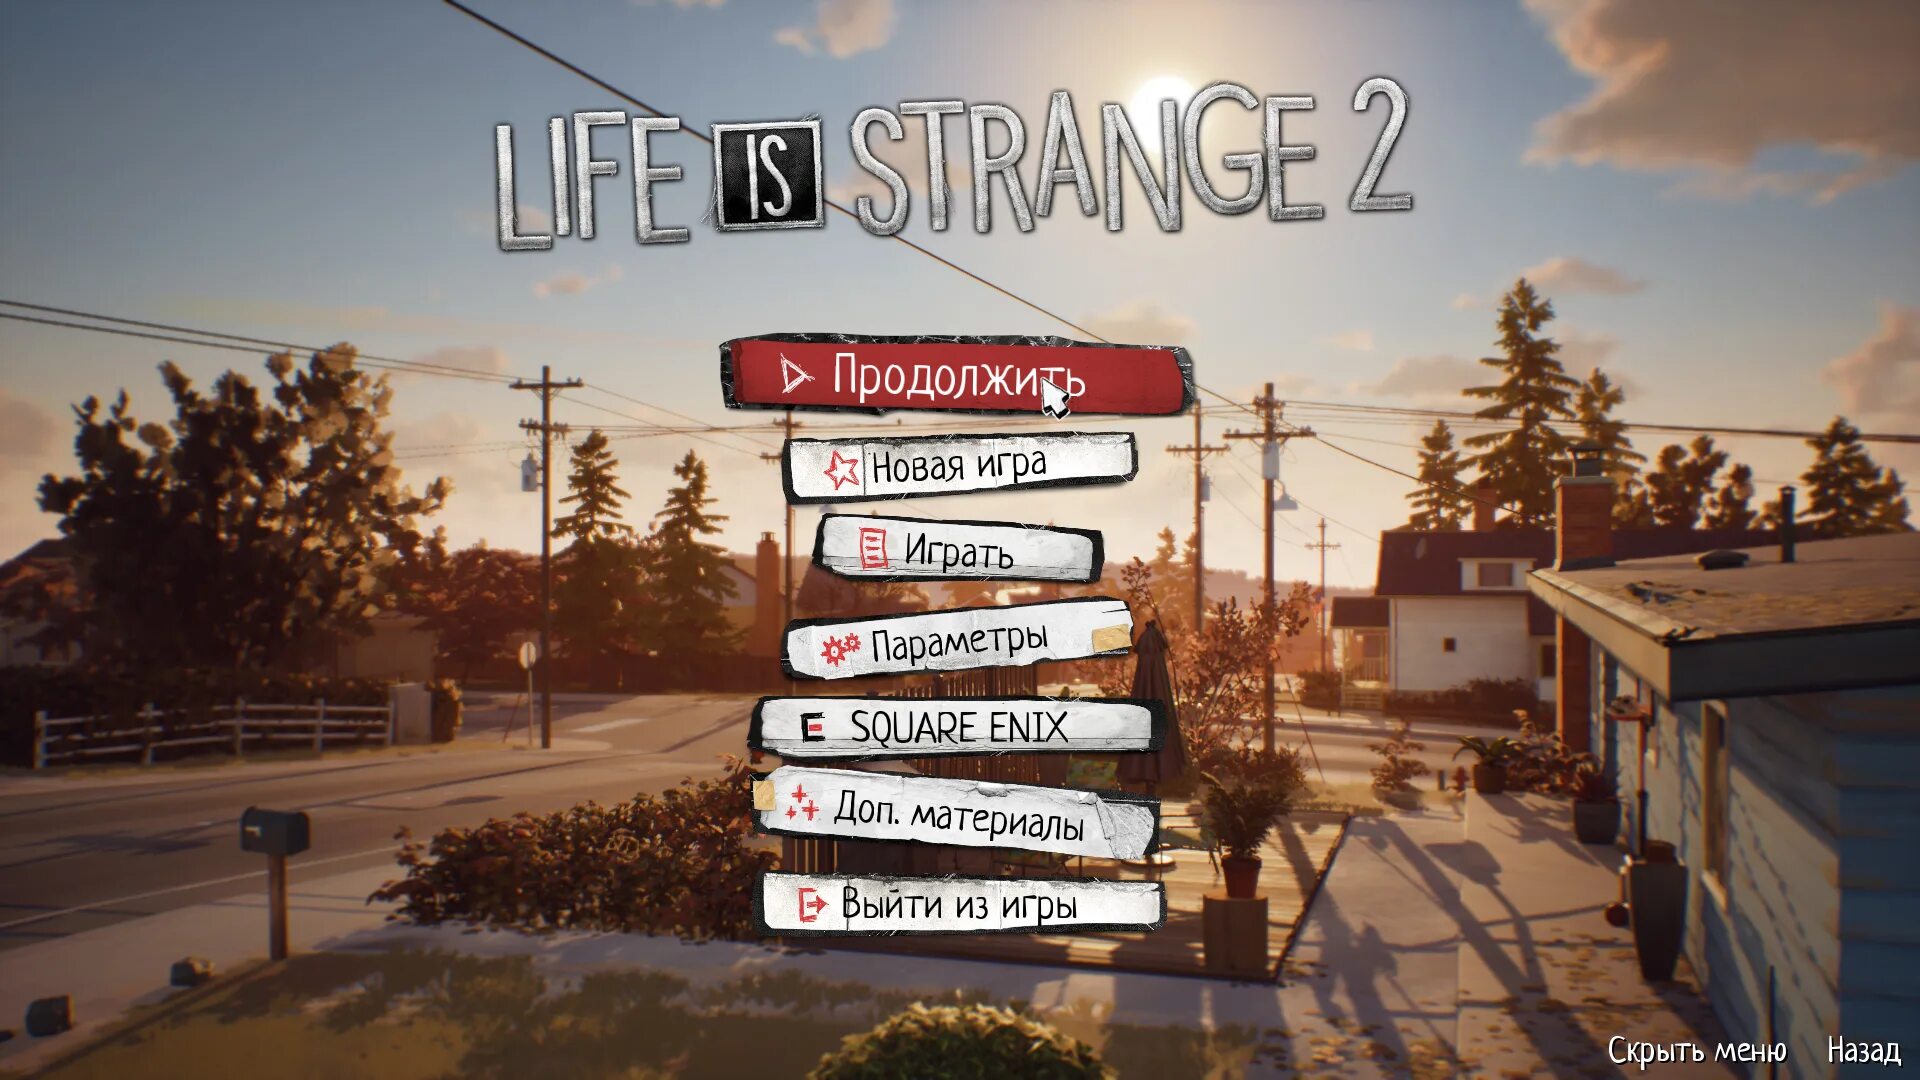 They started life a. Life is Strange меню. Игра Life is Strange 2. Life is Strange 2 menu. Life is Strange эпизод 2.